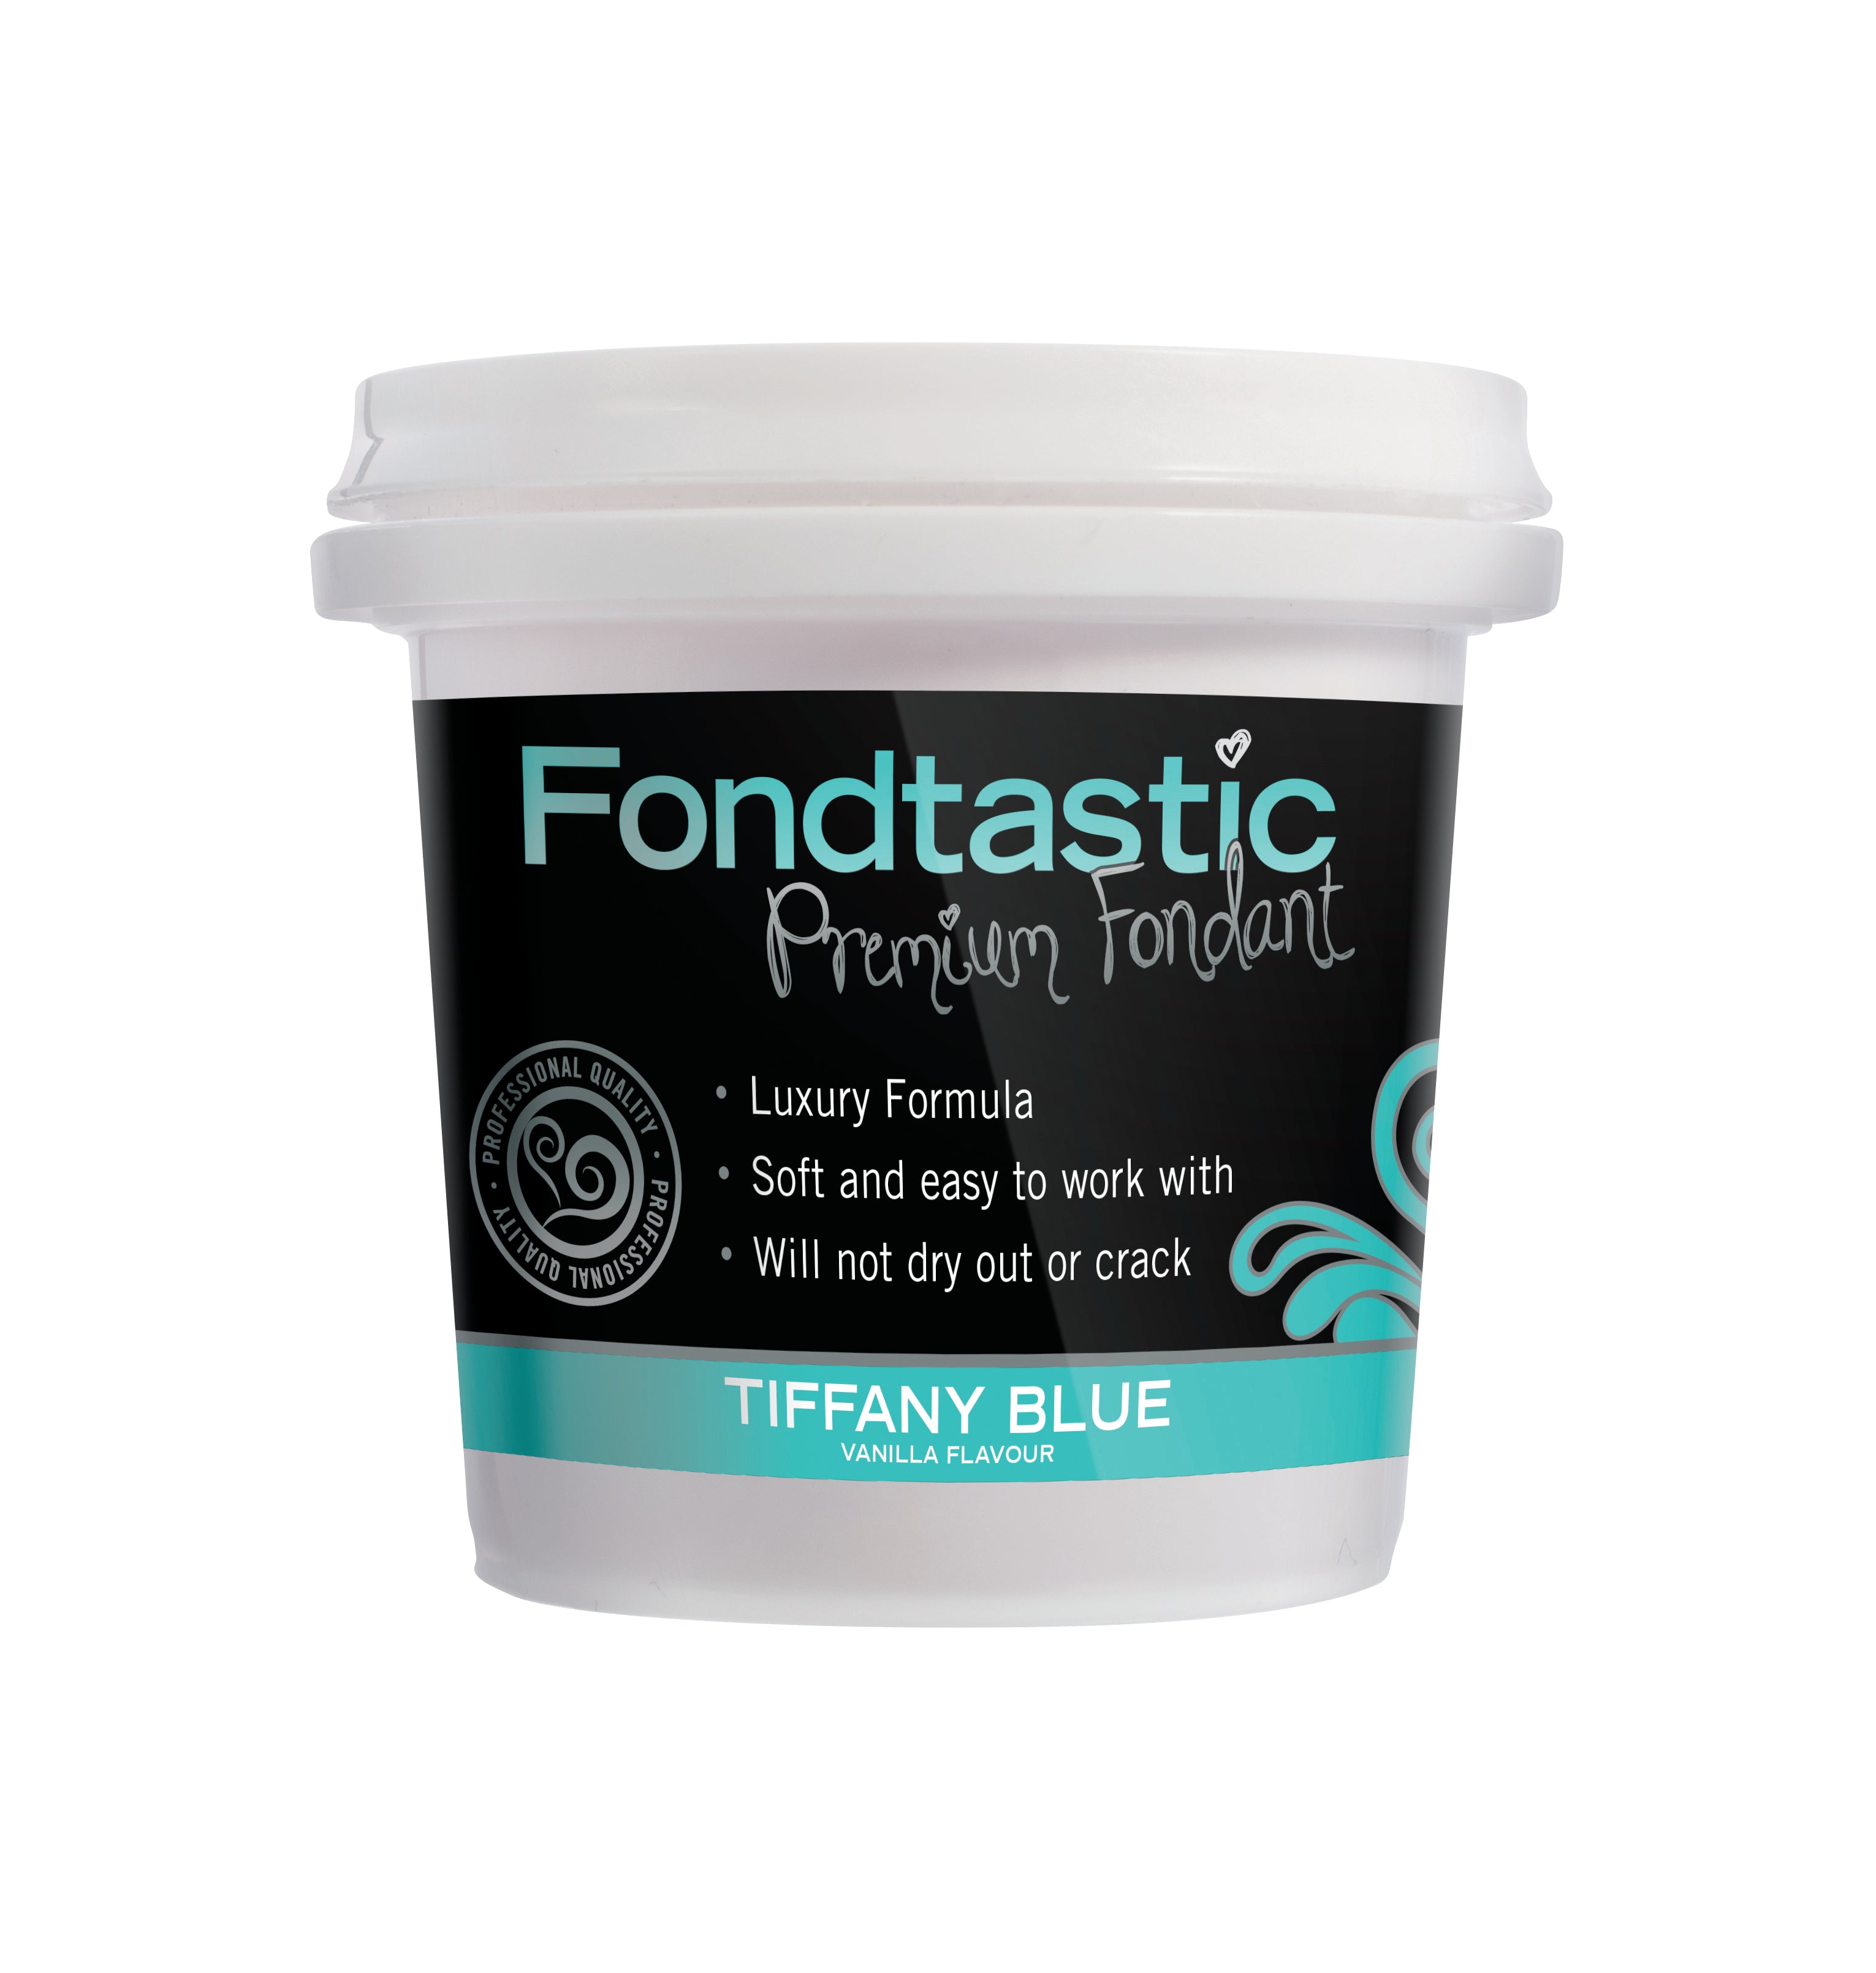 Fondtastic Premium Fondant - Tiffany Blue 225g